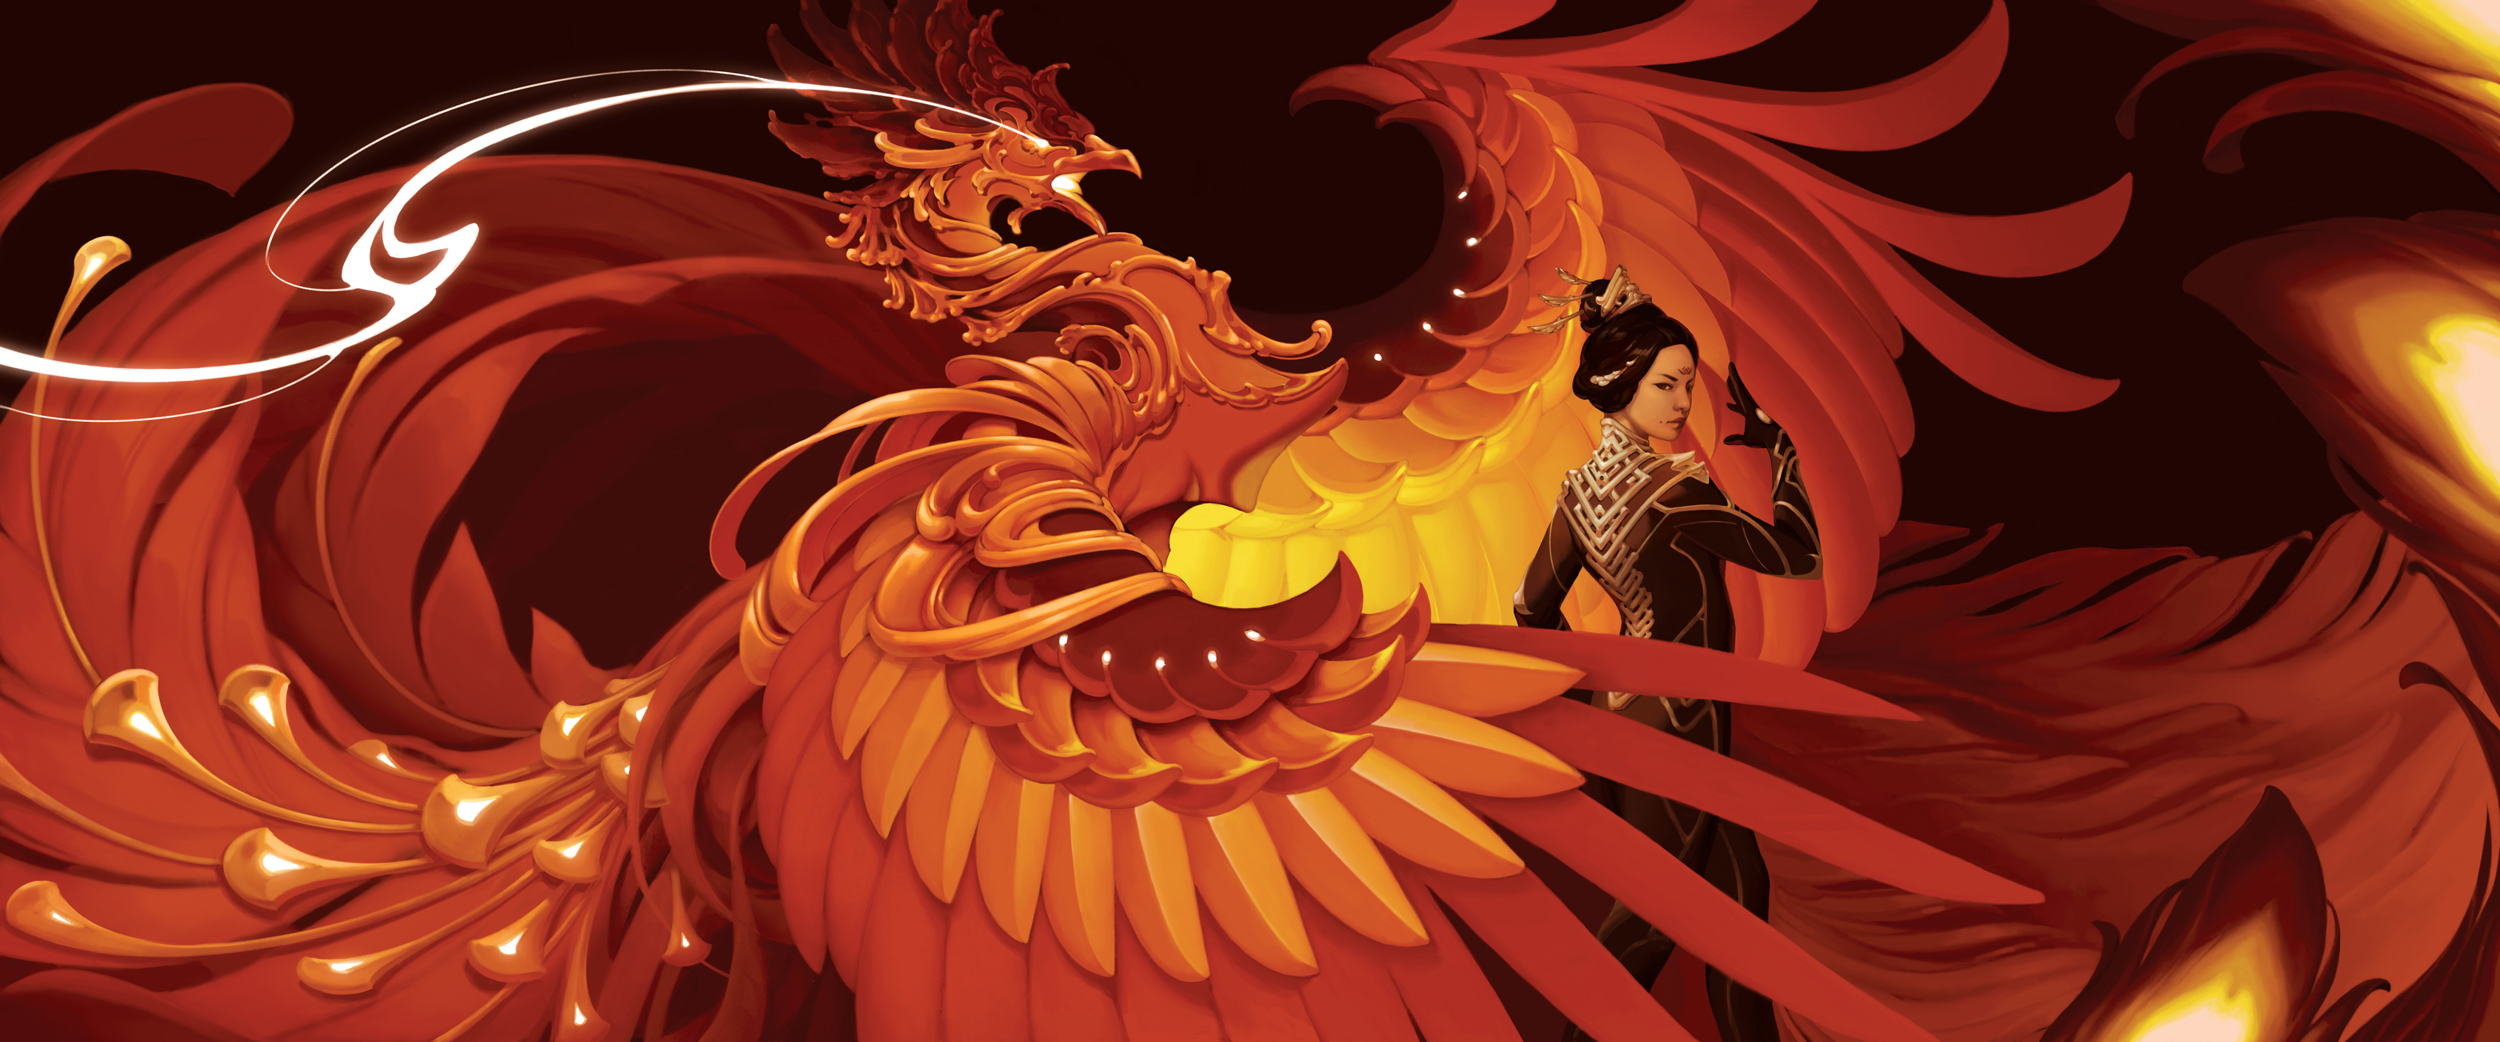 General 2500x1042 Iron widow book cover phoenix creature digital art ultrawide